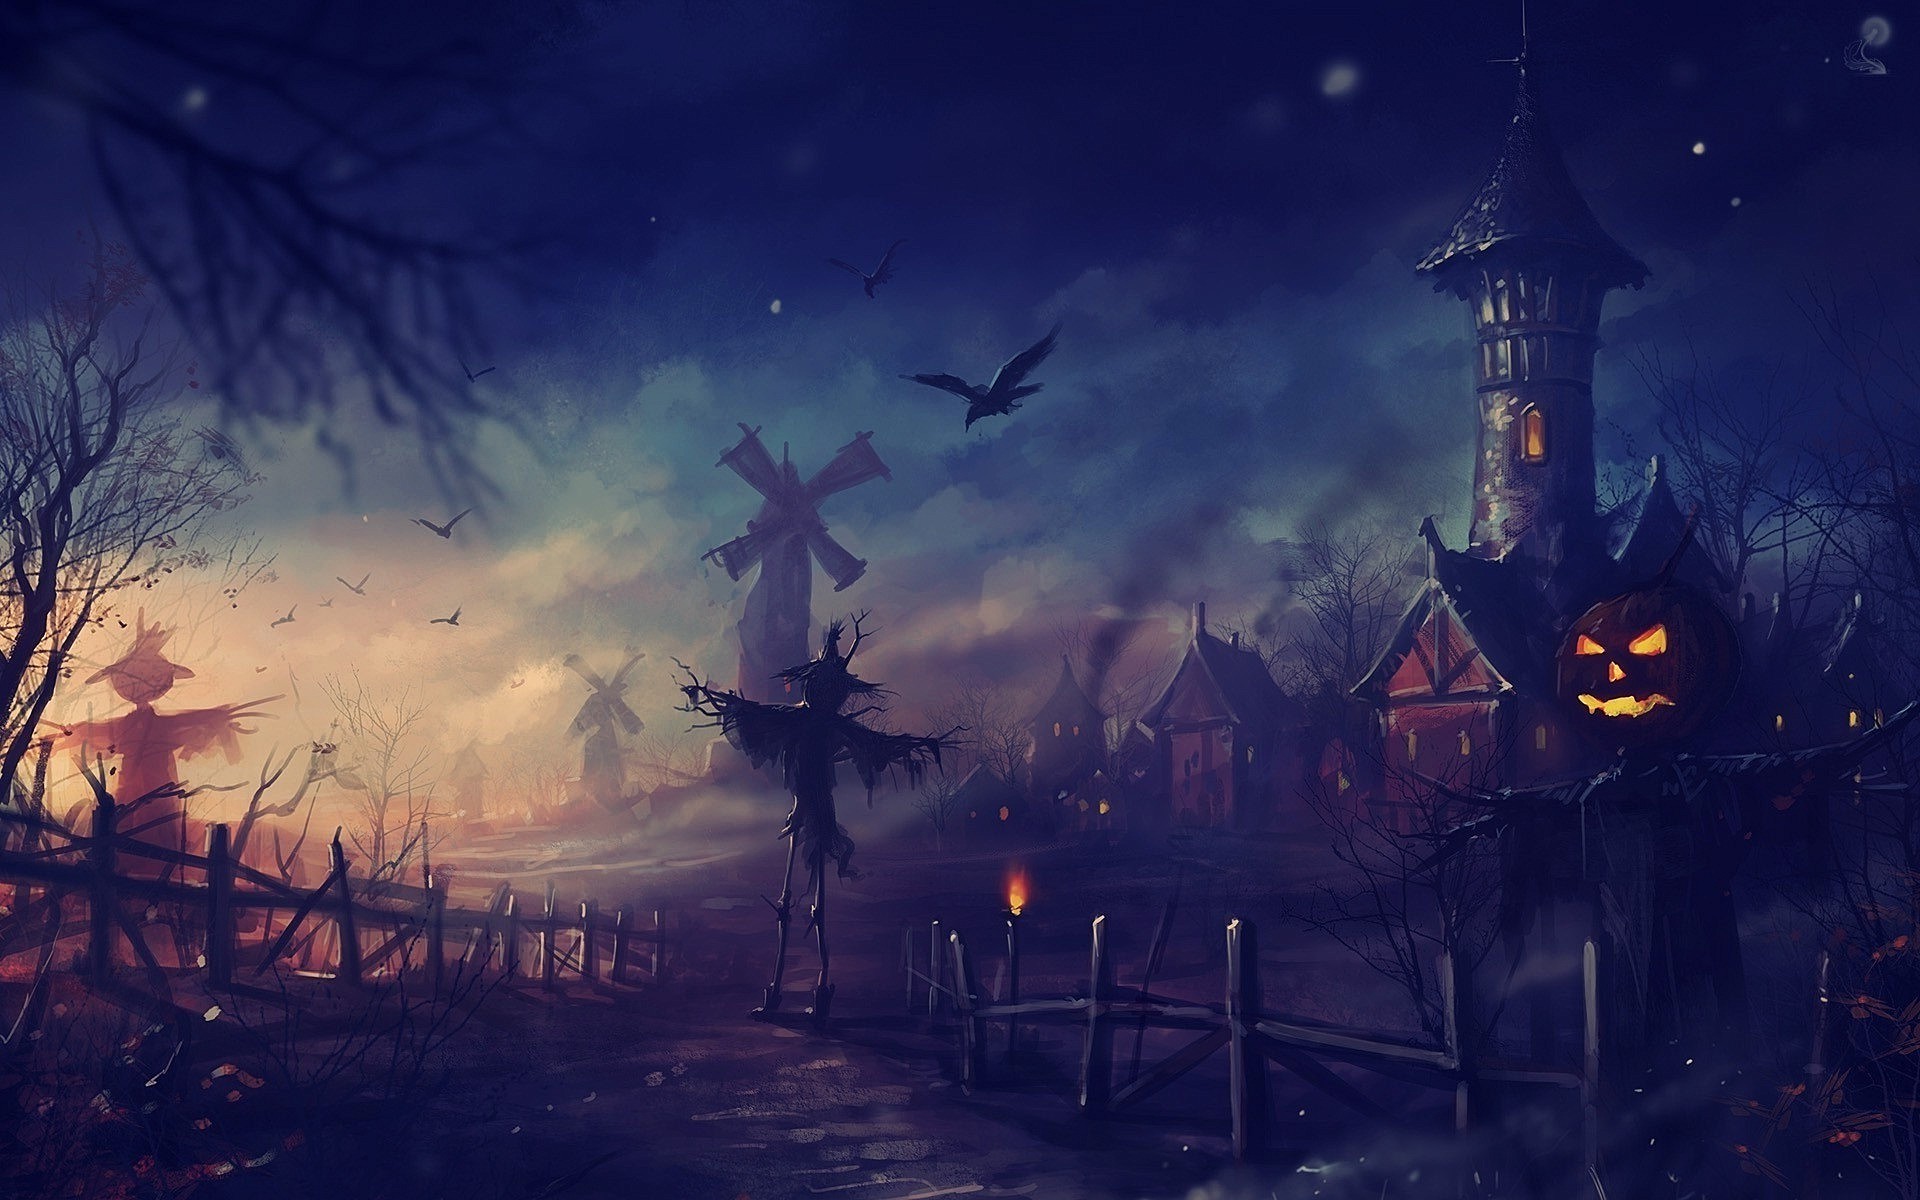 http://overnature.com/download/25-fonds-decran-de-grande-taille-avec-des-paysages-halloween.jpg